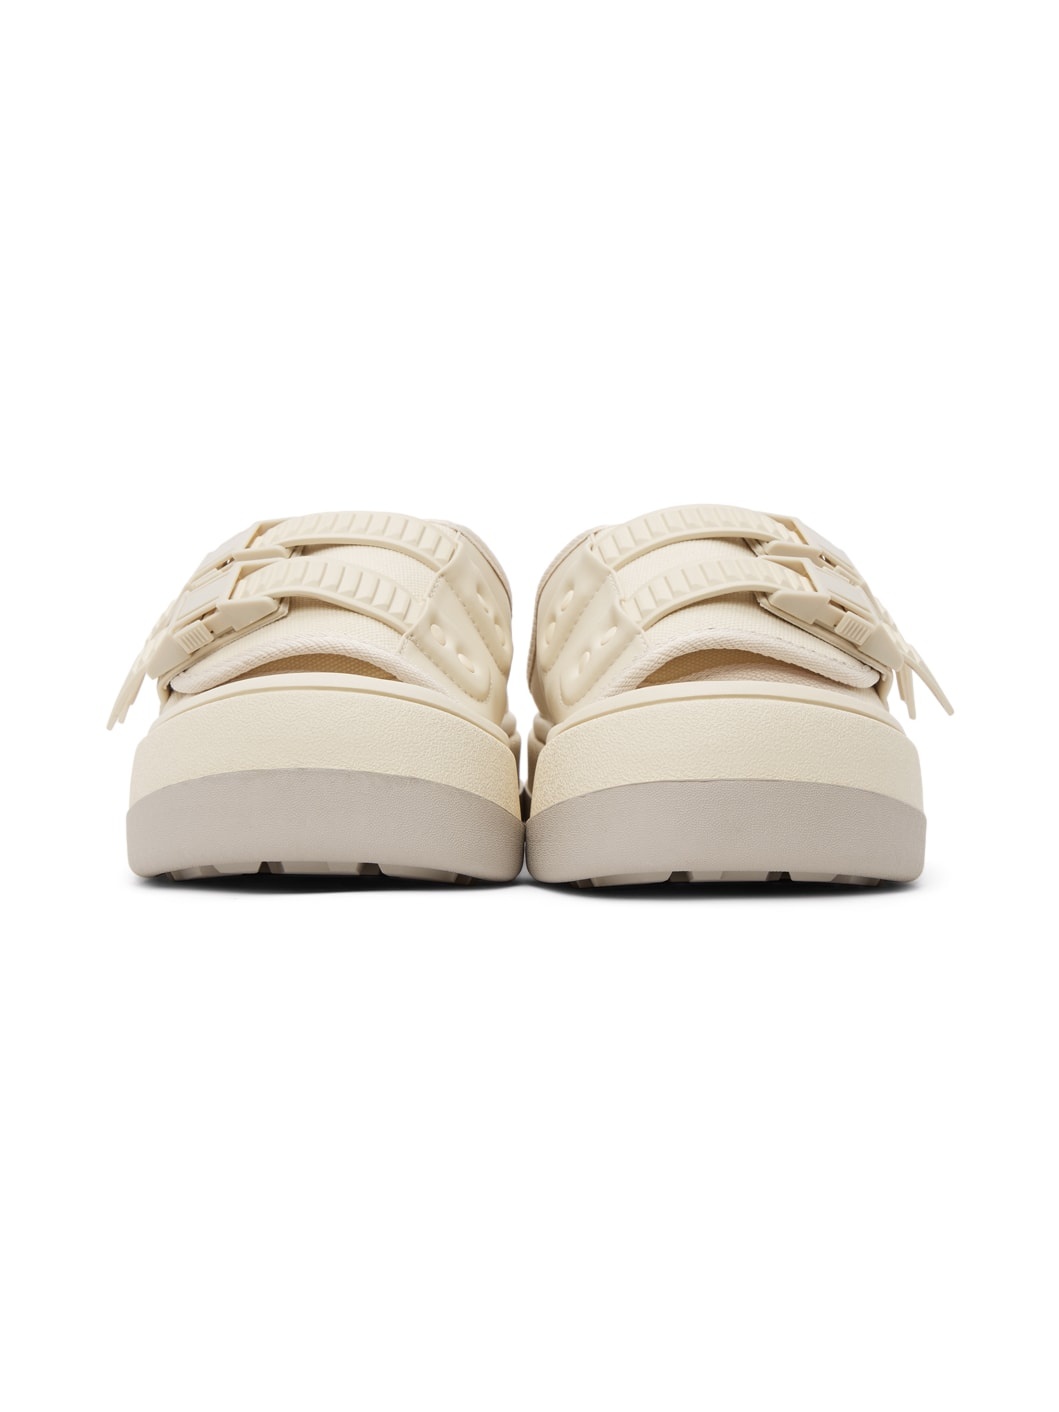 SSENSE Exclusive Off-White Capri Sandals - 2